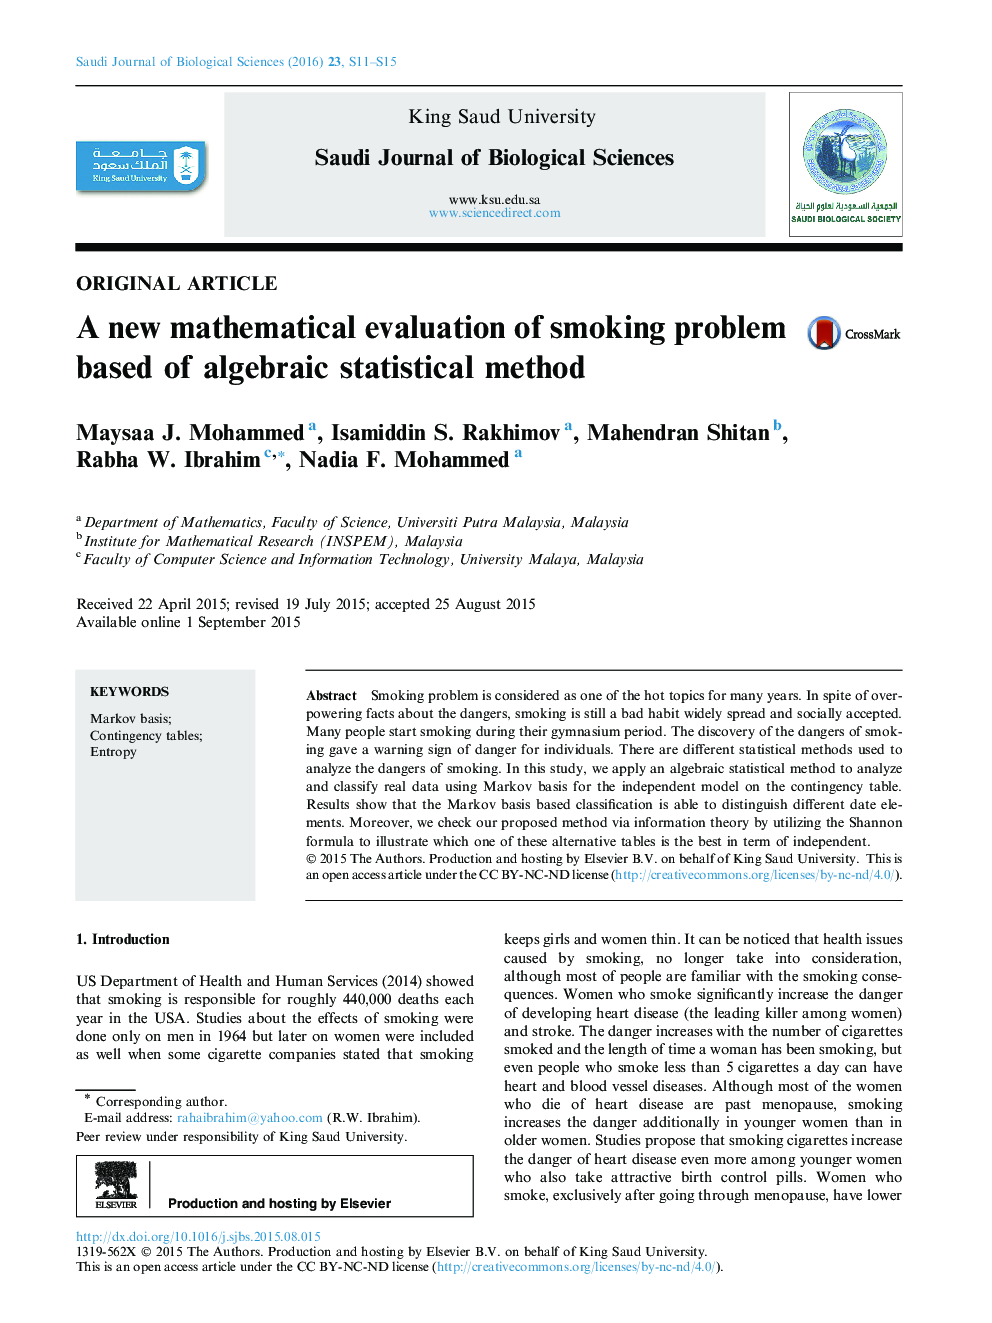 A new mathematical evaluation of smoking problem based of algebraic statistical method 